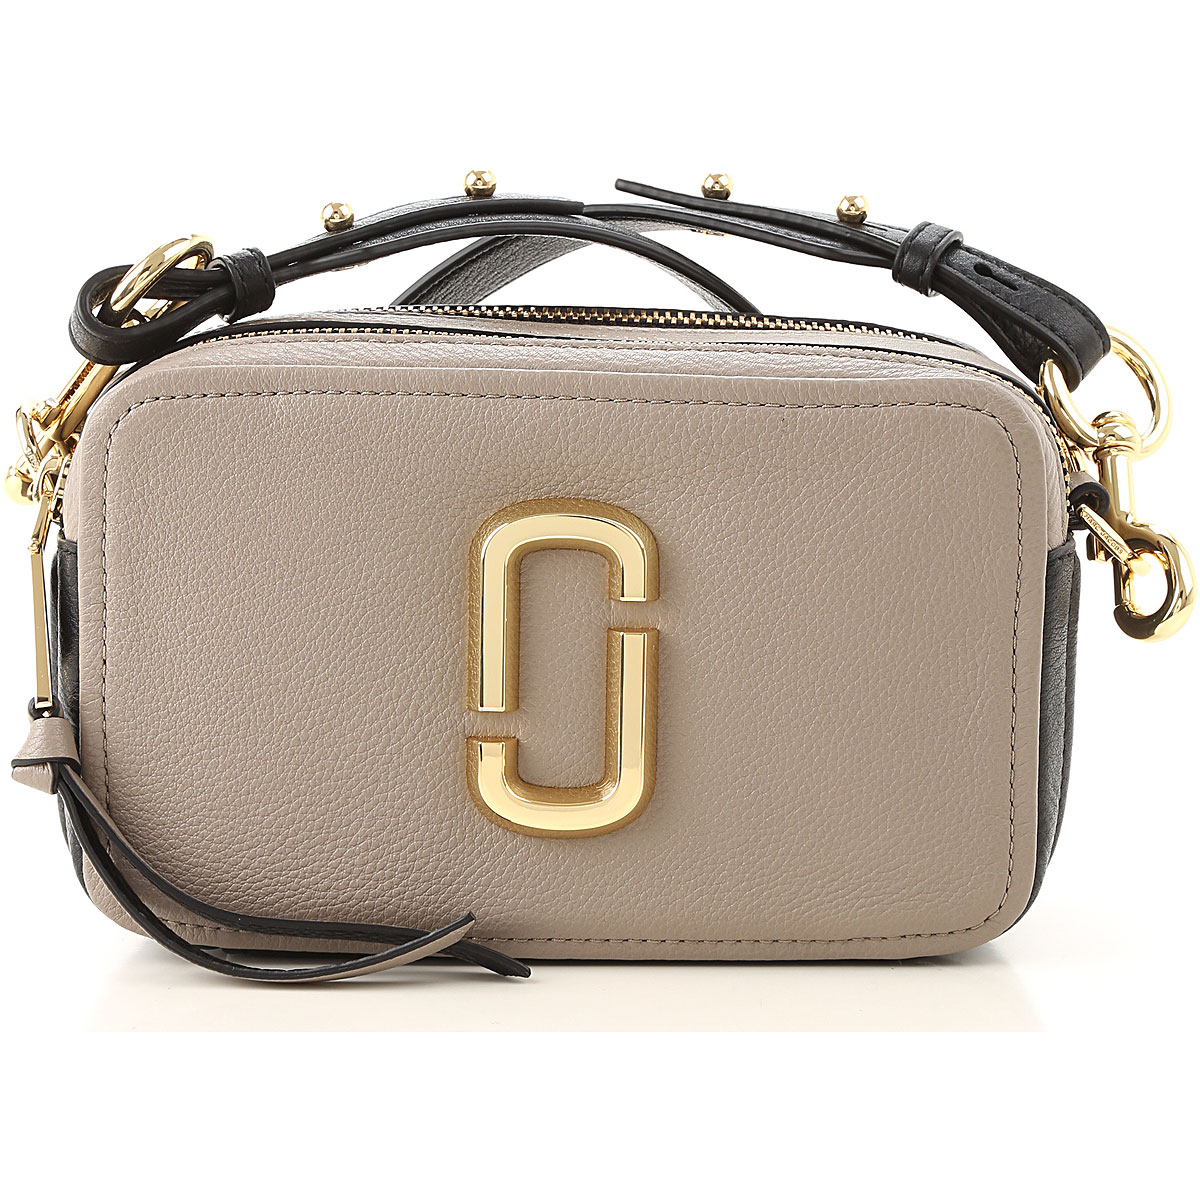 Handbags Marc Jacobs, Style code: m0014591-077-